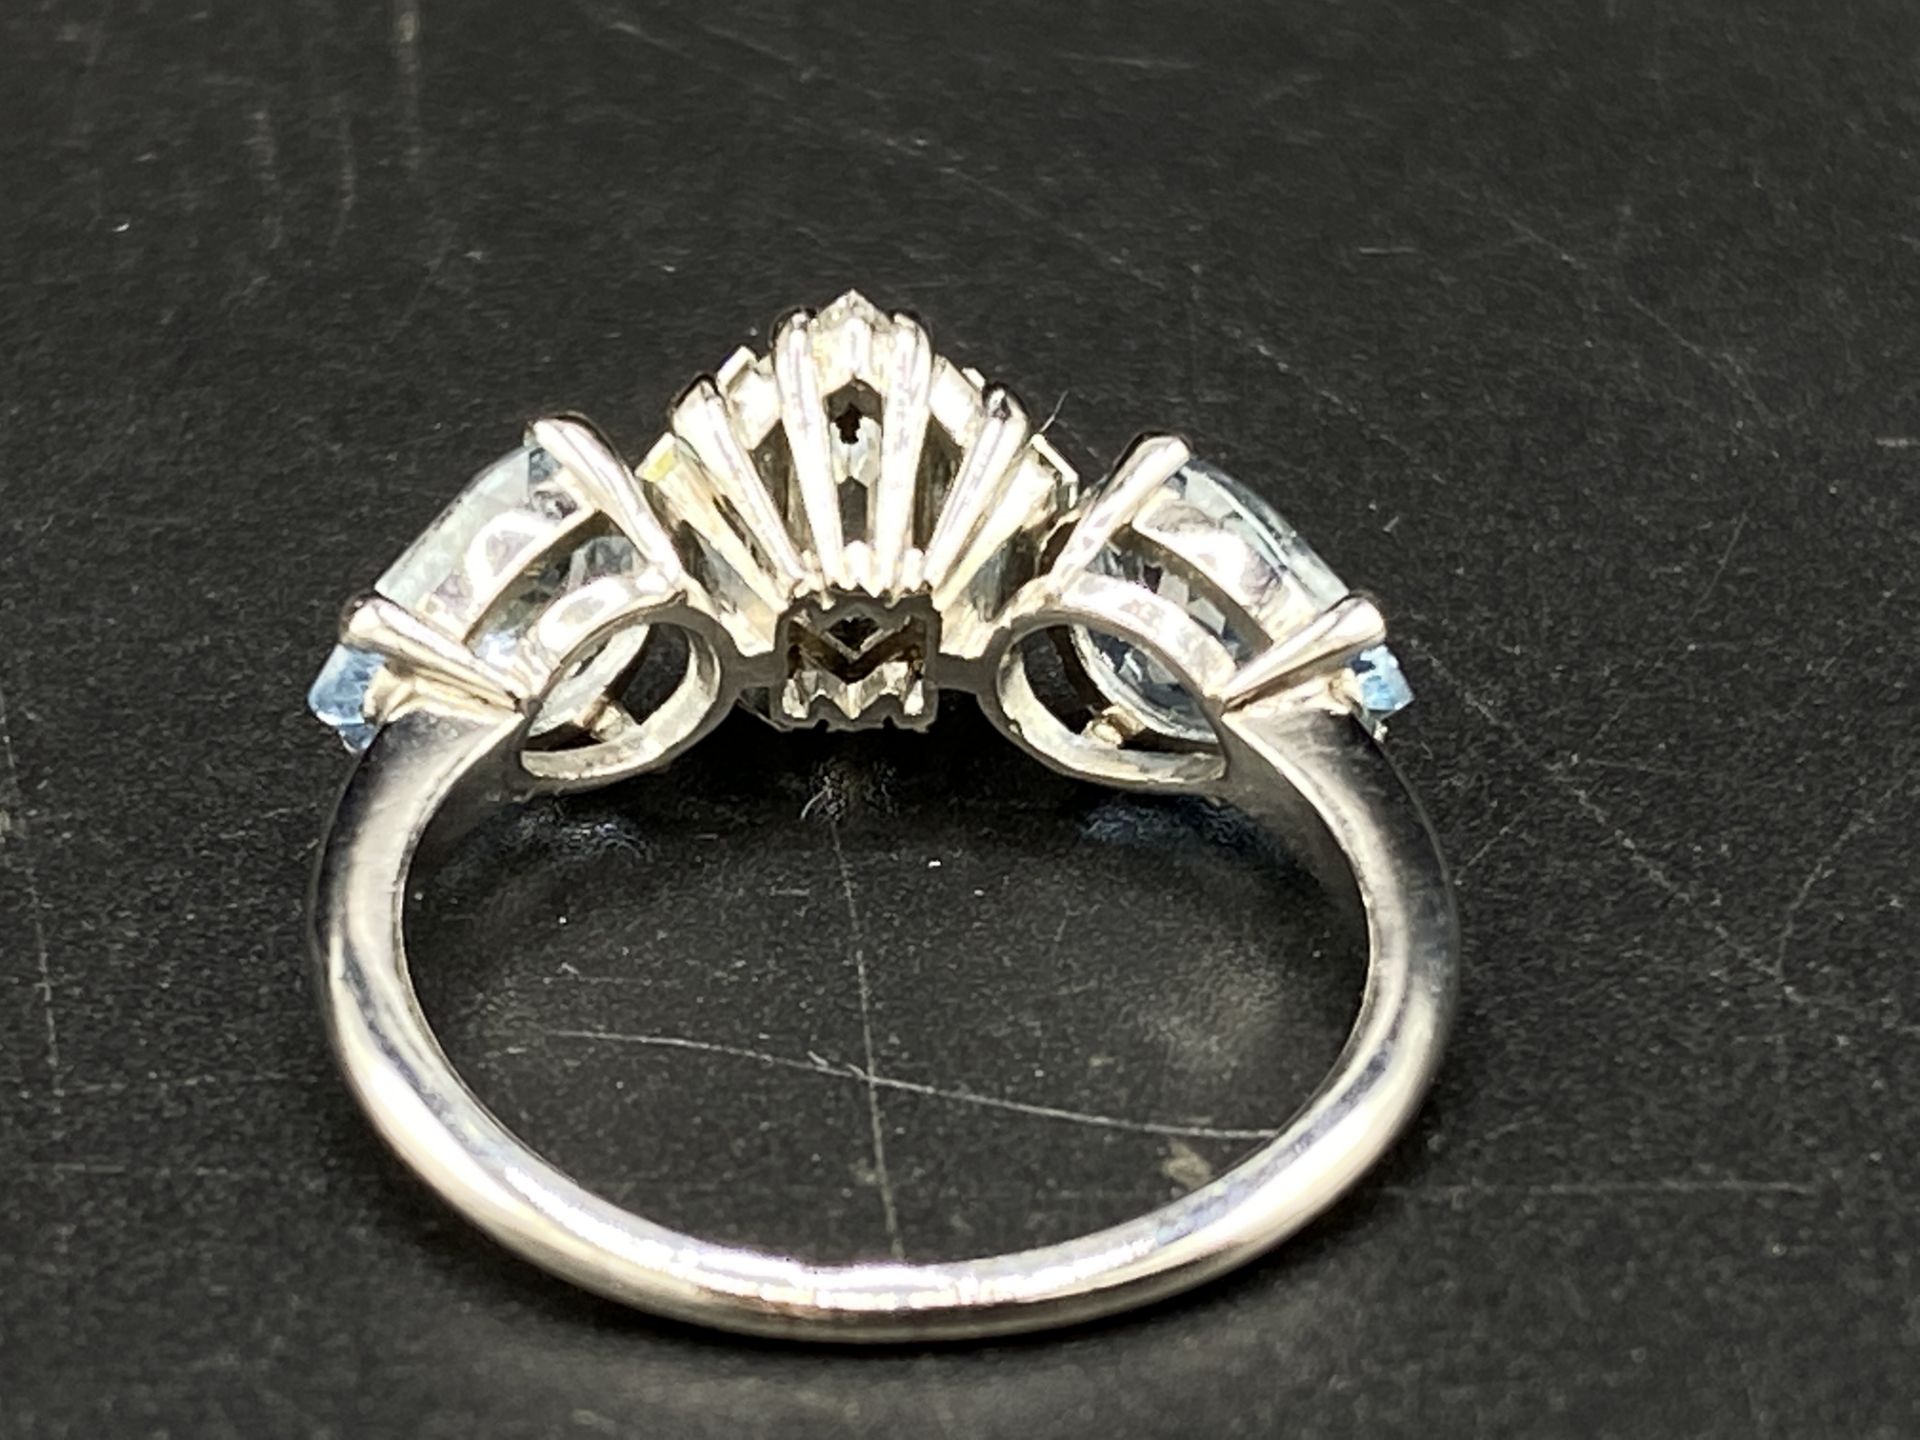 White gold, aquamarine and diamond ring - Image 3 of 5